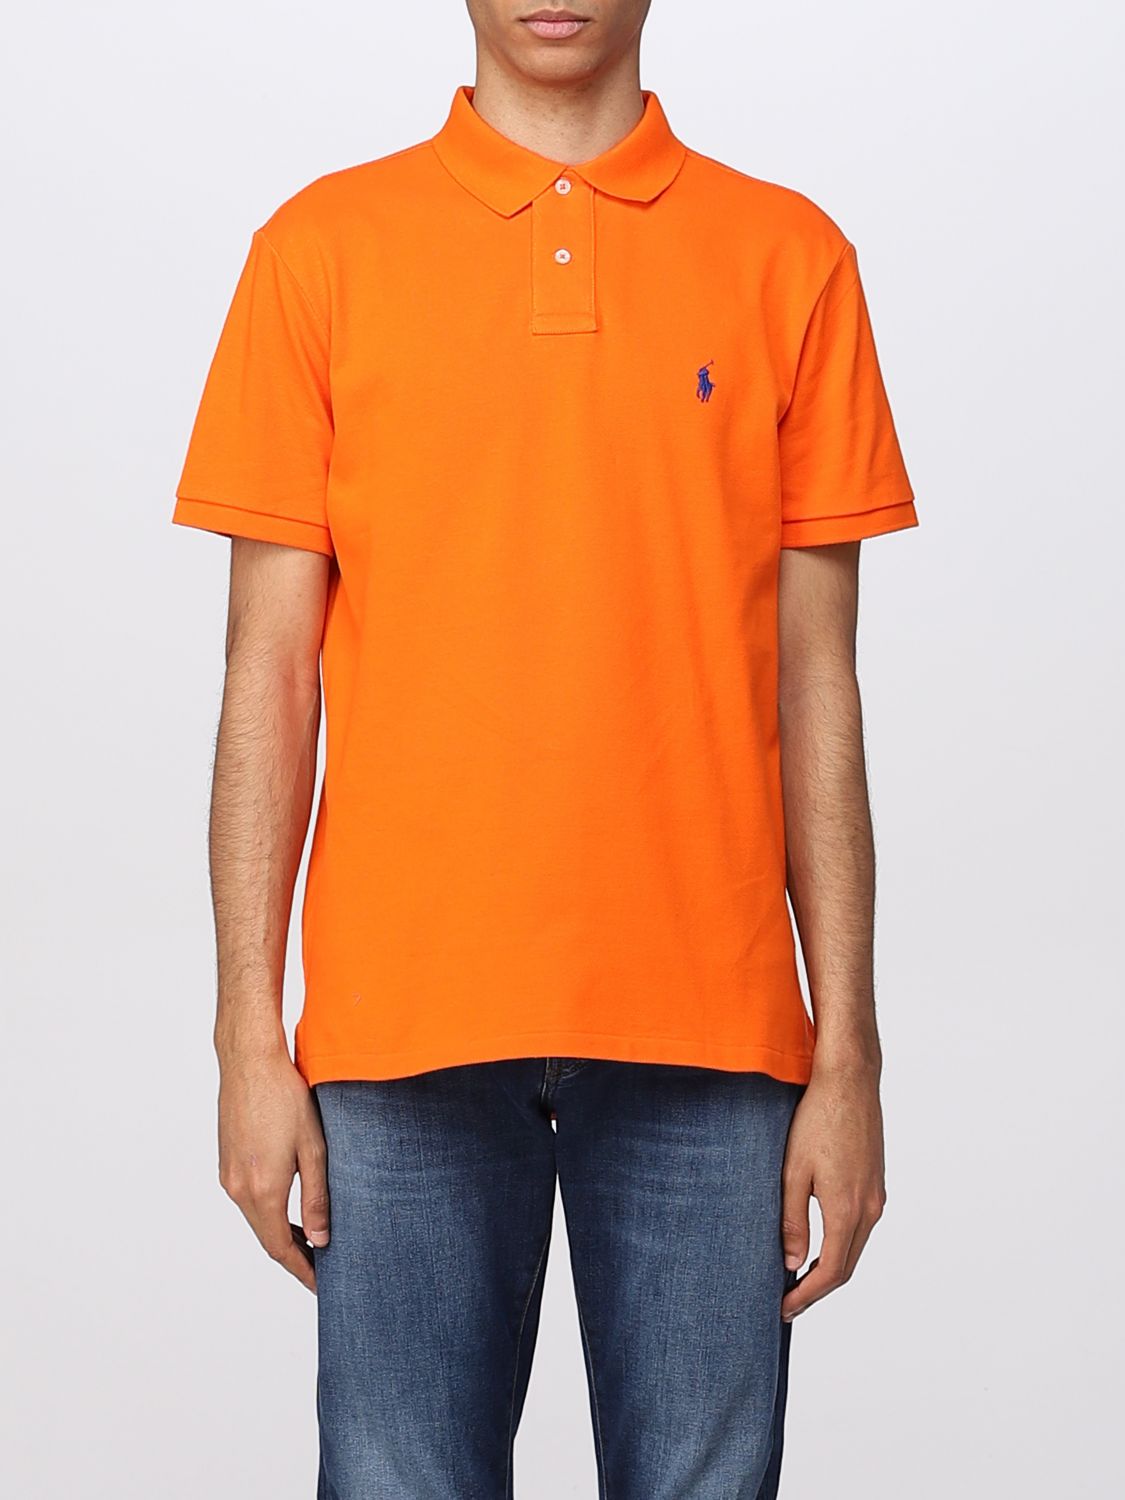 POLO RALPH LAUREN: polo shirt for man - Orange | Polo Ralph Lauren polo  shirt 710795080 online on 